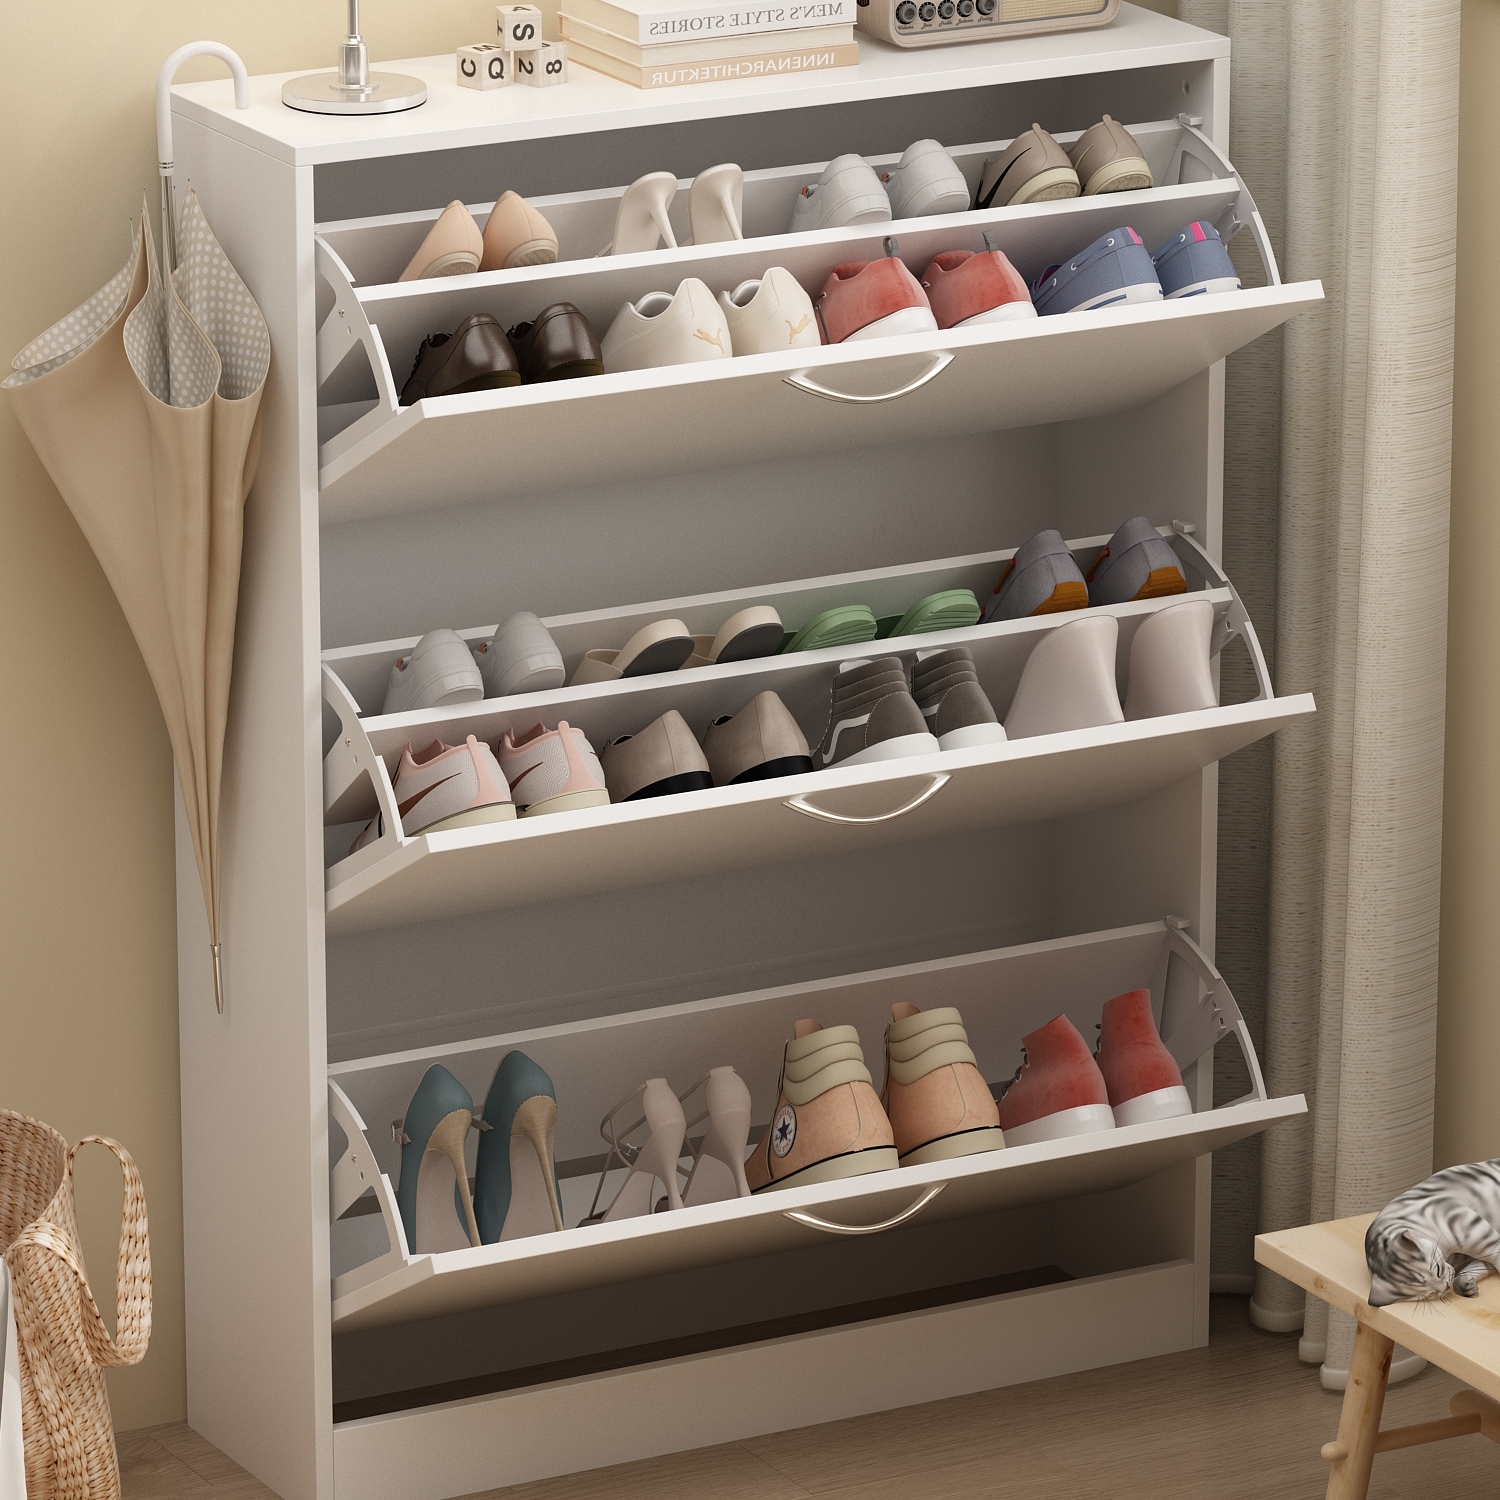 https://ak1.ostkcdn.com/images/products/is/images/direct/0935fcb79b82709a7ec8044798de493e56c6976d/Home-Modern-3-Drawer-Shoe-Cabinet-3-Tier-Shoe-Rack-Storage-Organizer.jpg